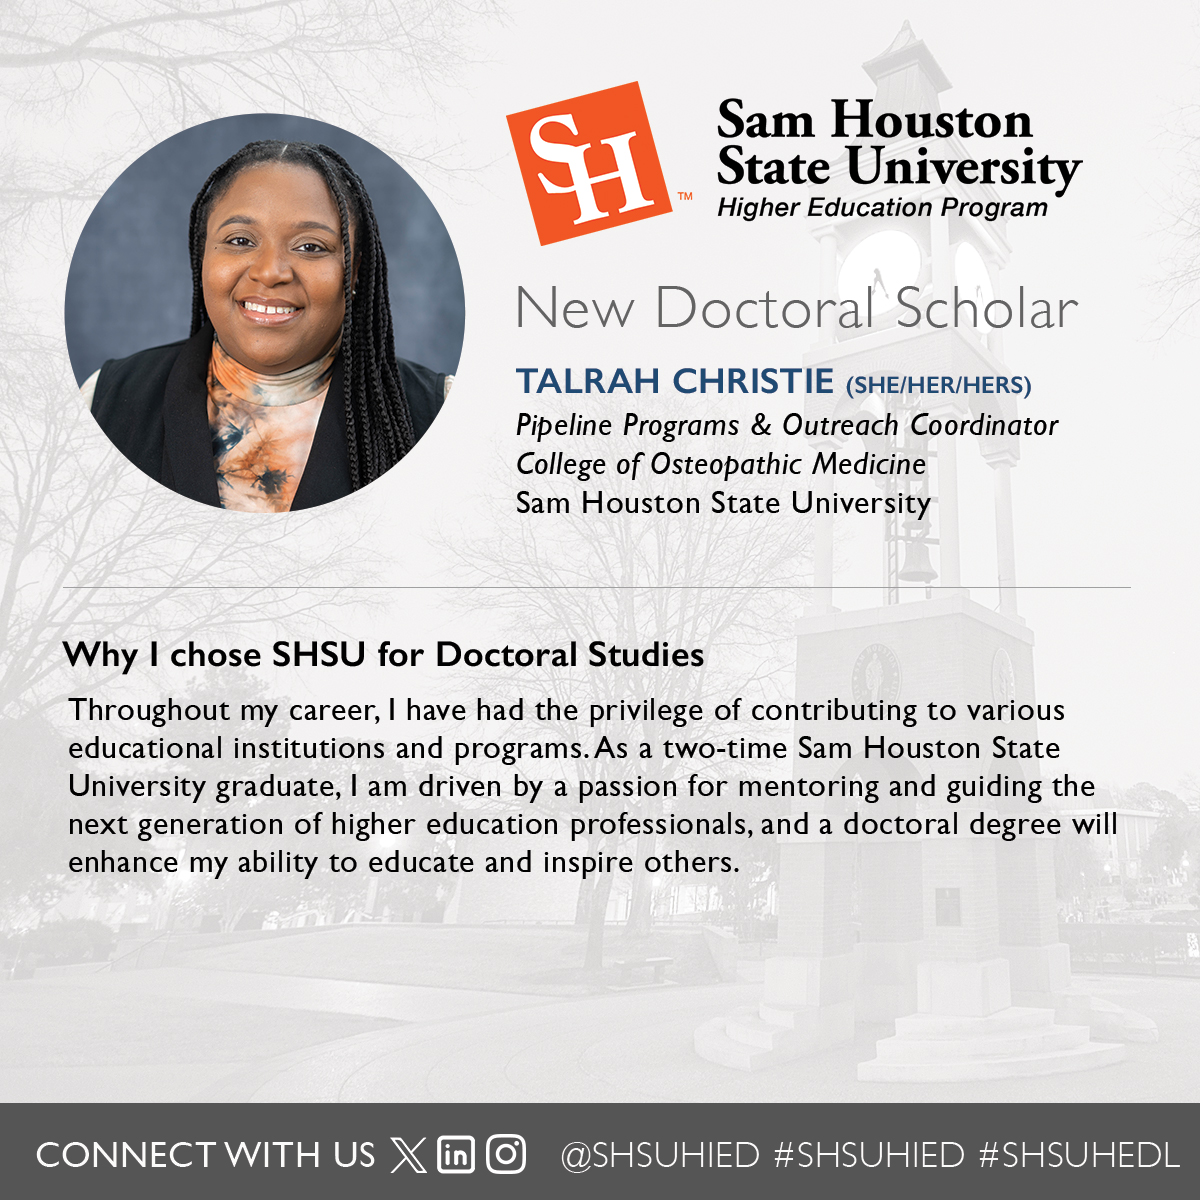 Meet Talrah Christie, a new #SHSUHEDL doctoral scholar. #SHSUHIED #SHSUCOE #SHSU #sagrad #sadoc #sapro #sachat @SHSUCOE @SHSUGradSchool